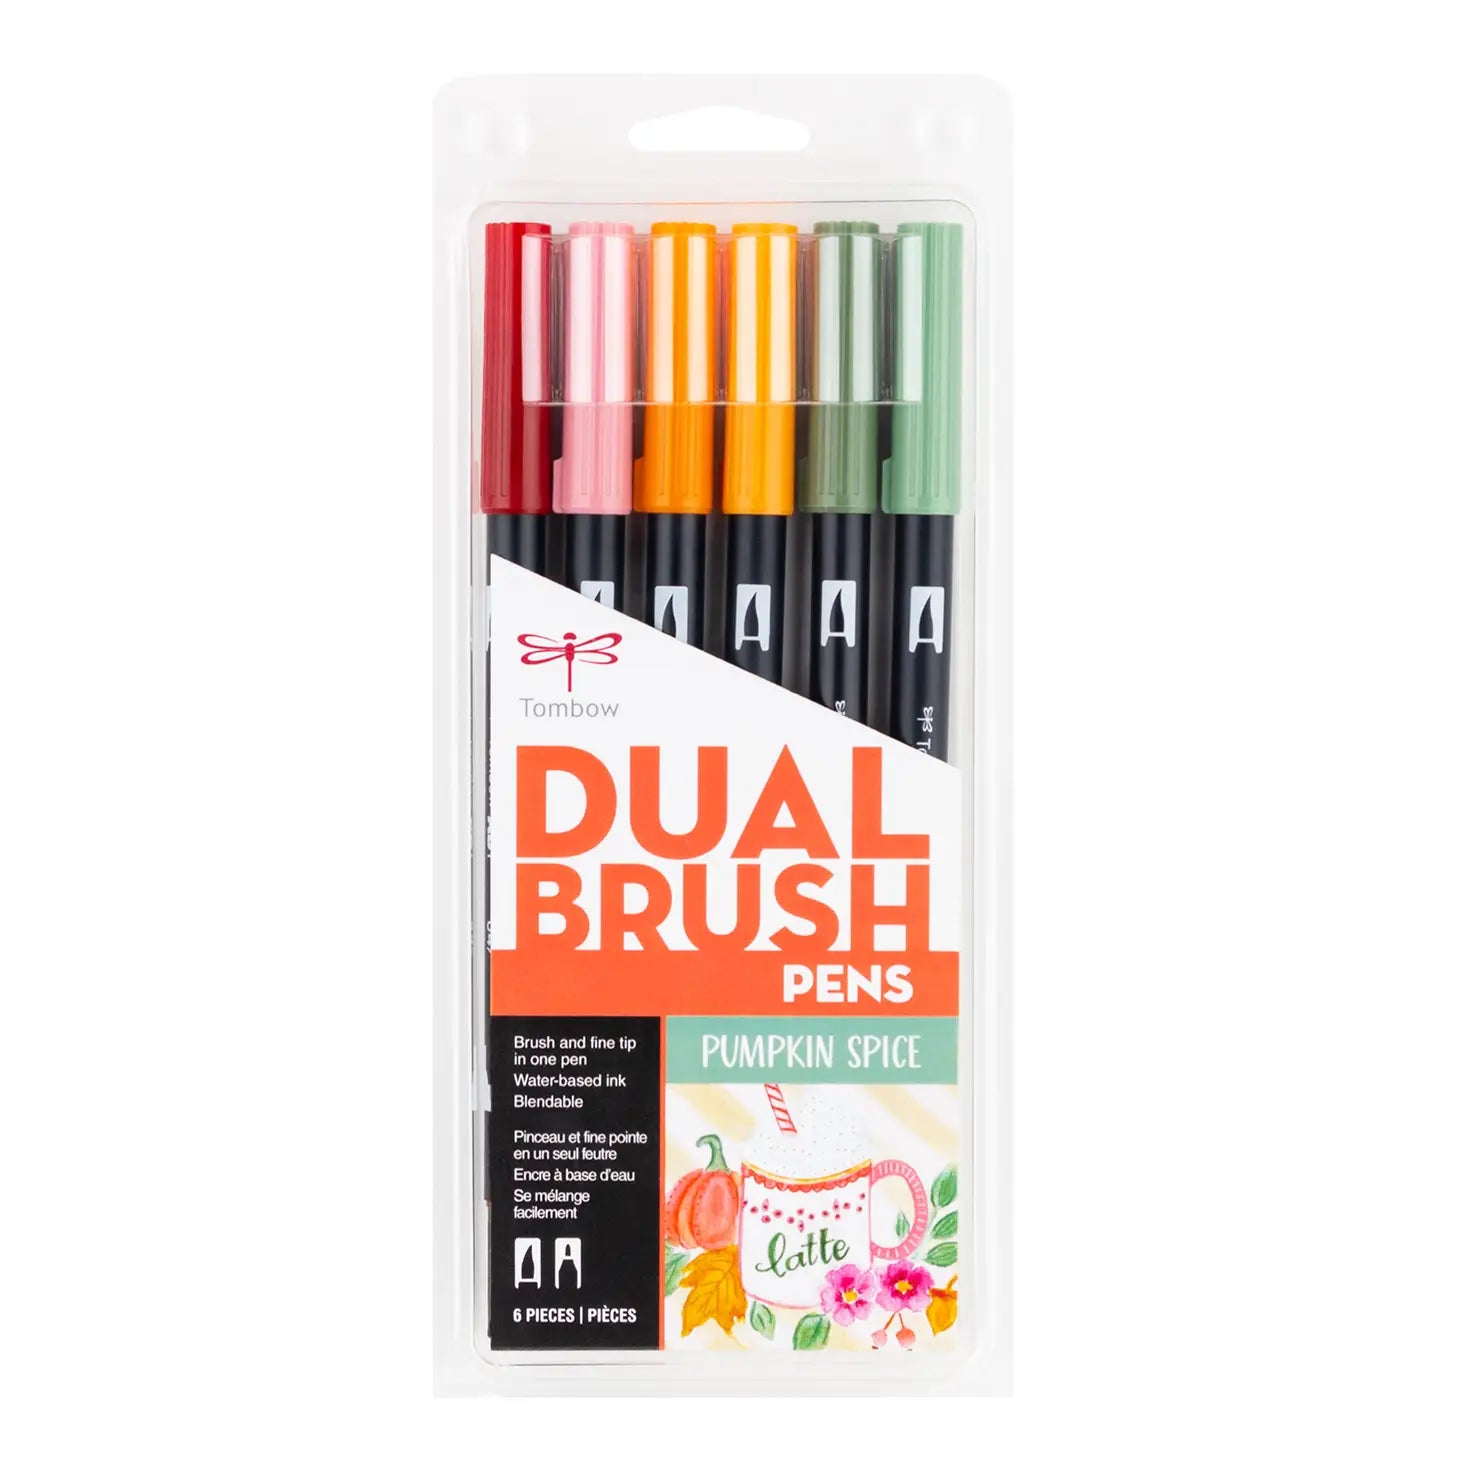 Brush & Fine Pen Set - Bold Set of 6